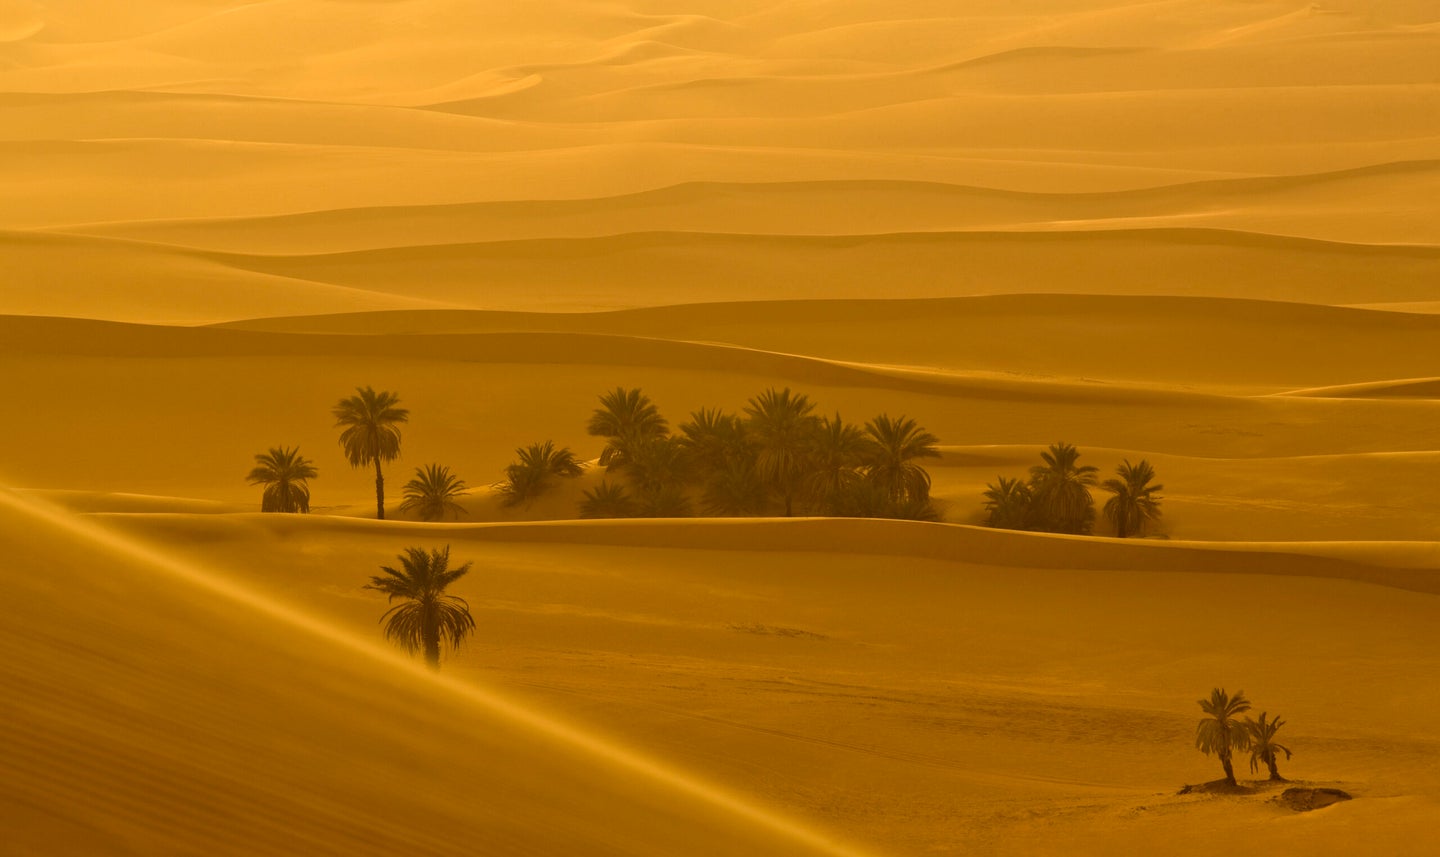 Sahara desert at sunset.